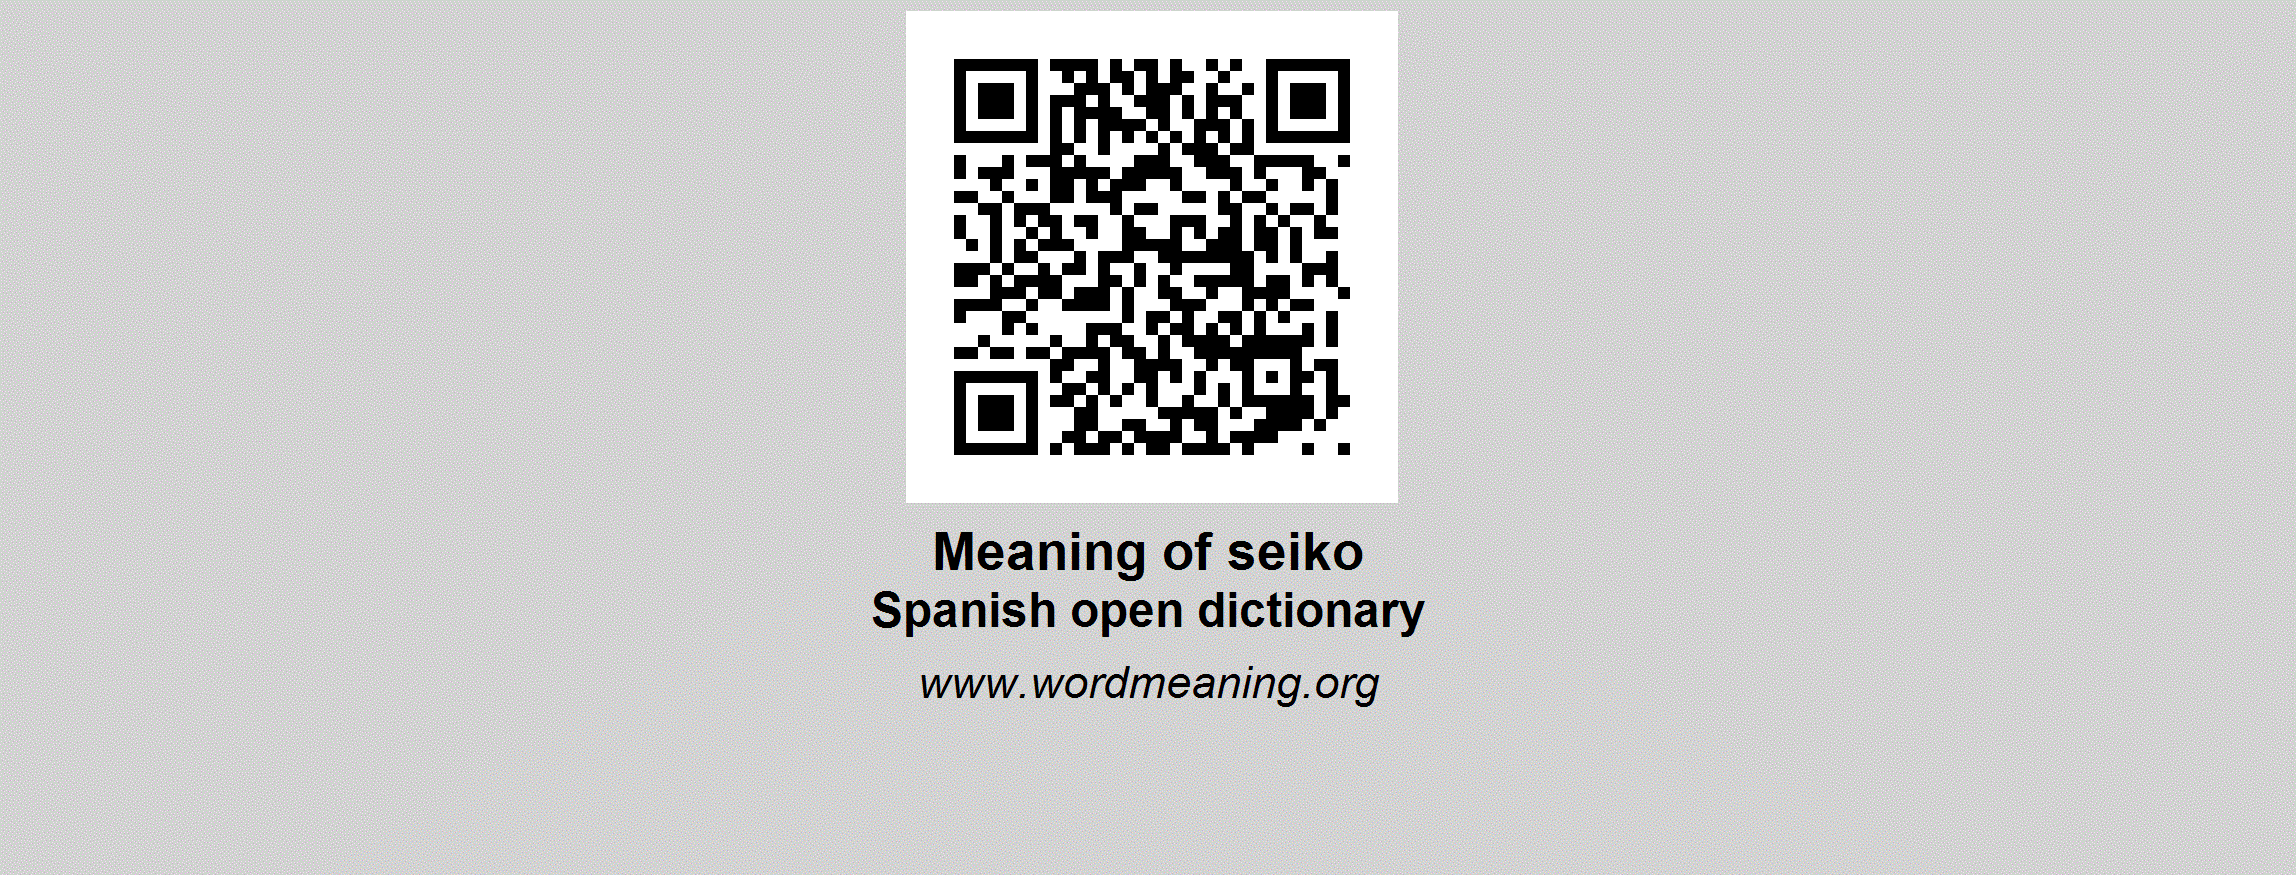 SEIKO - Spanish open dictionary